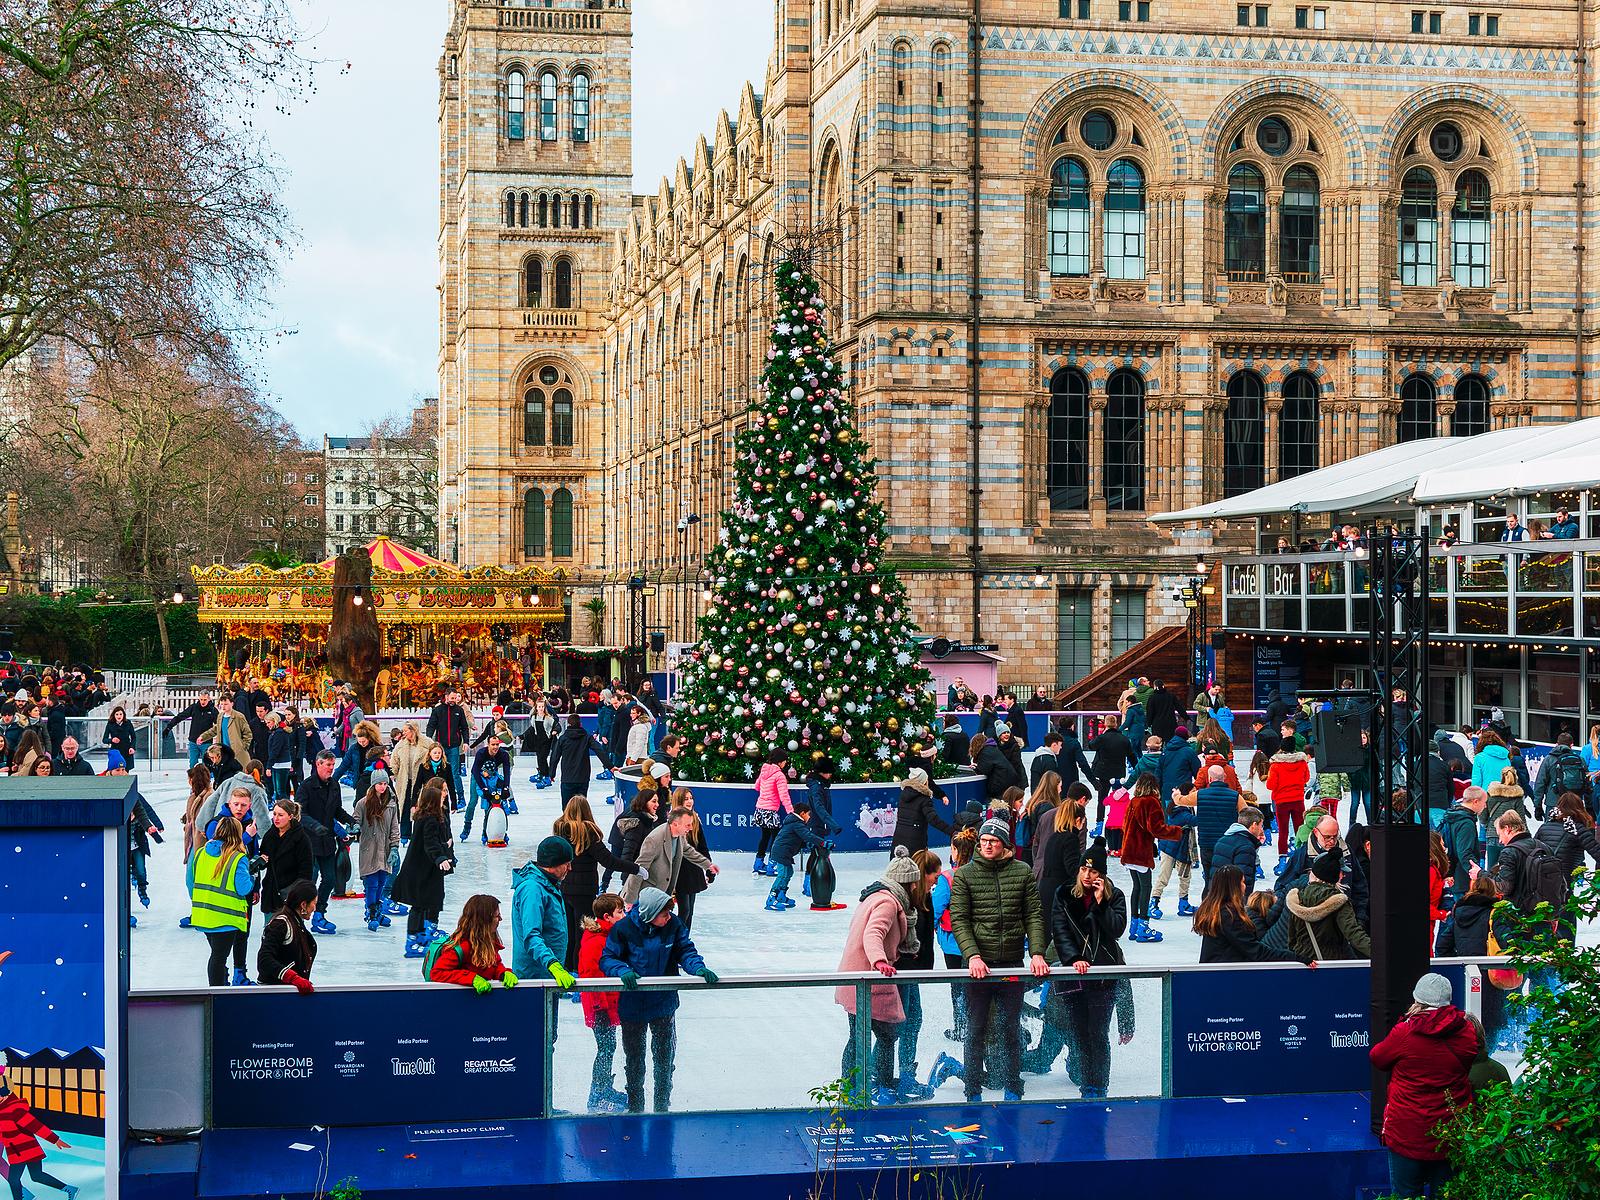 The Best Seasonal Ice Skating Rinks To Visit Around The UK